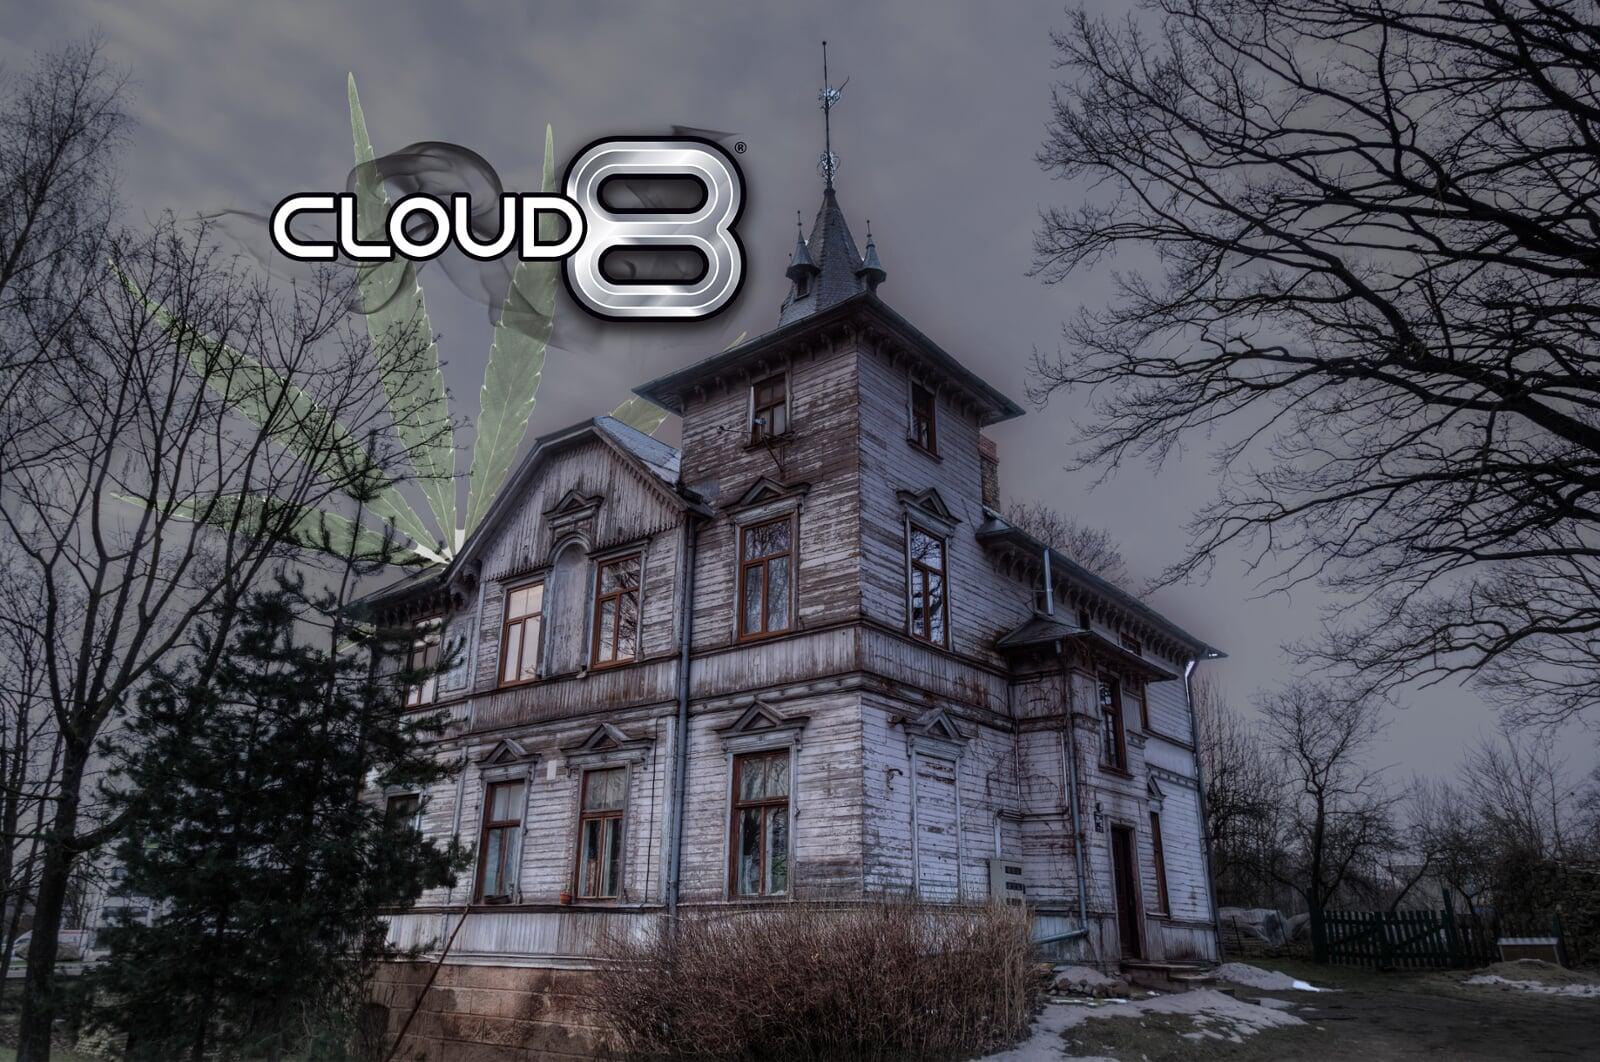 The Haunted House of Hemp: A Cloud 8 Halloween Adventure